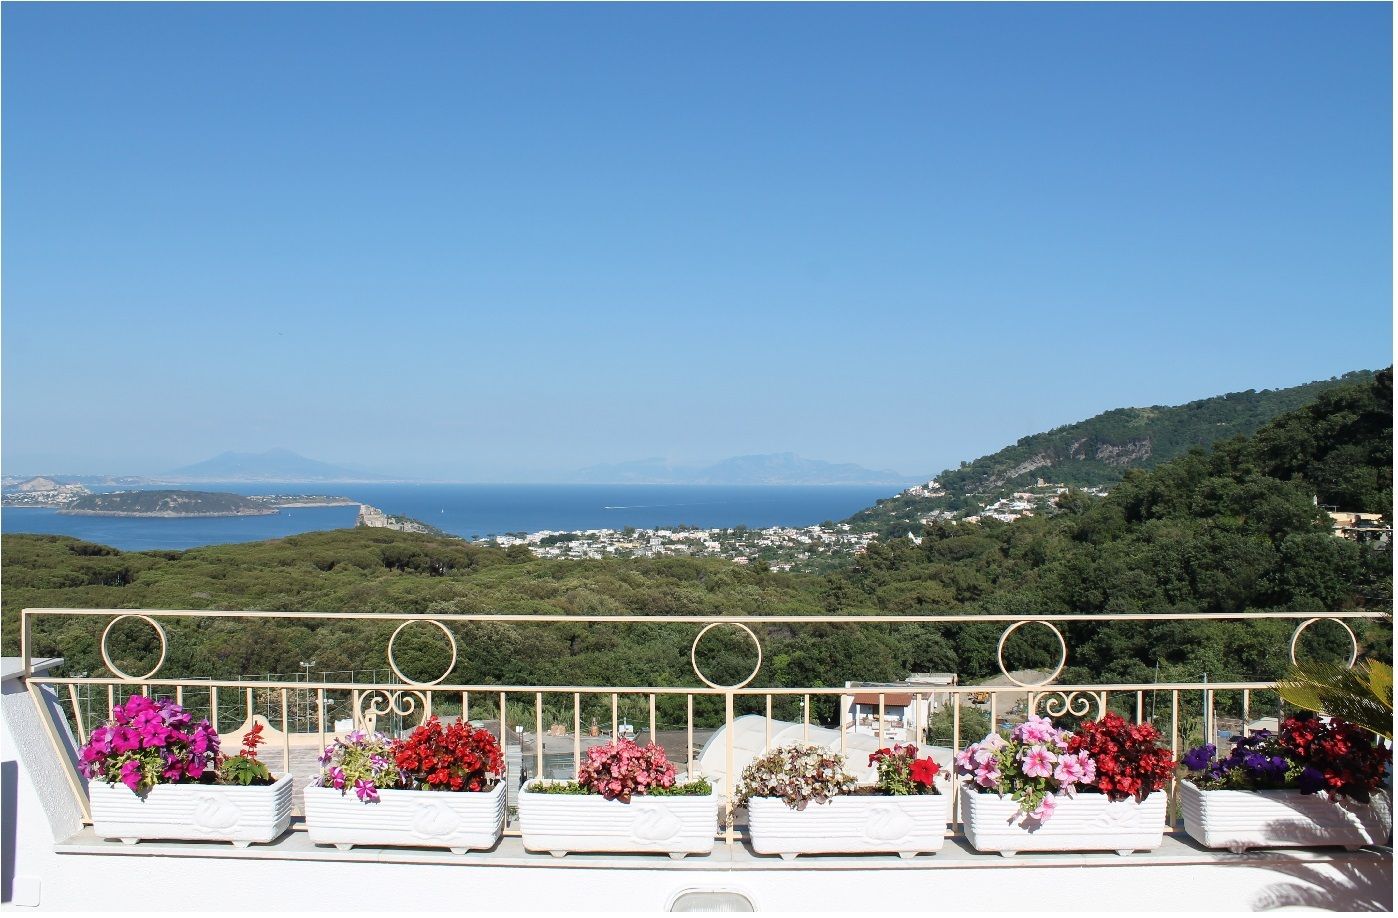 Affitto Luxury Villa with Breathtaking Views in Barano d´Ischia | luxforsale.it